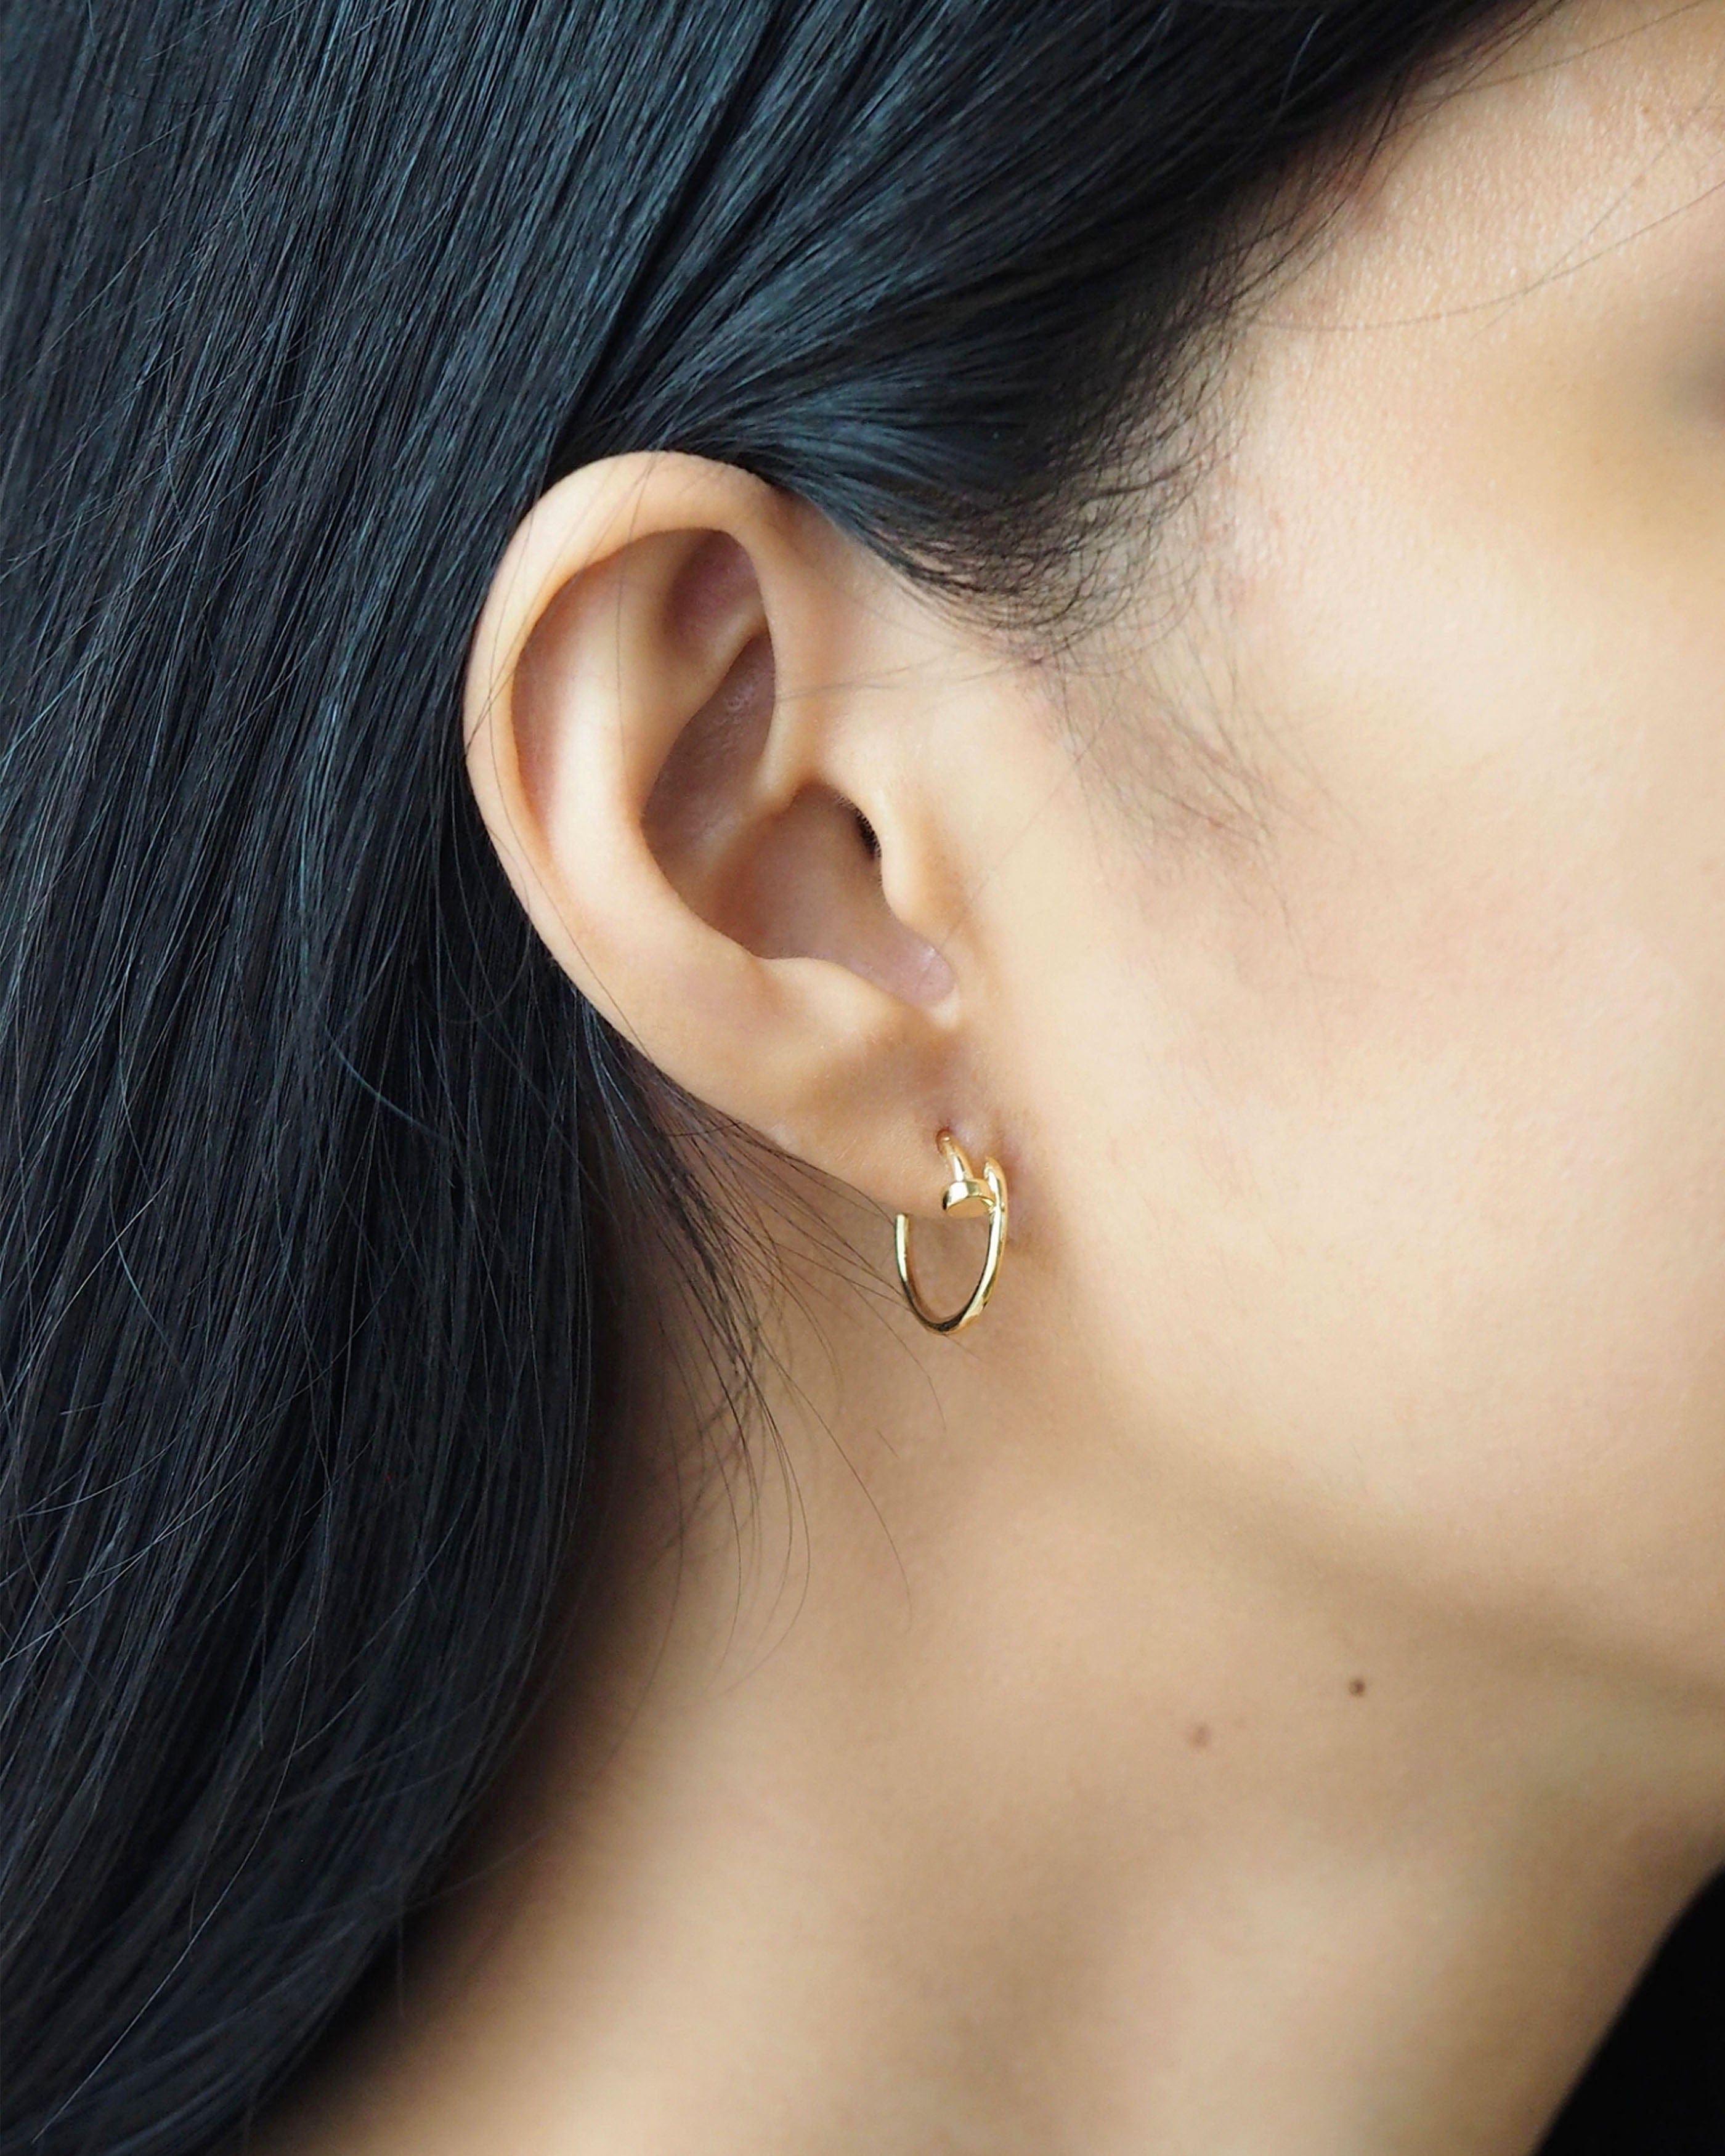 TAI JEWELRY Earrings Silver Nail Hoop